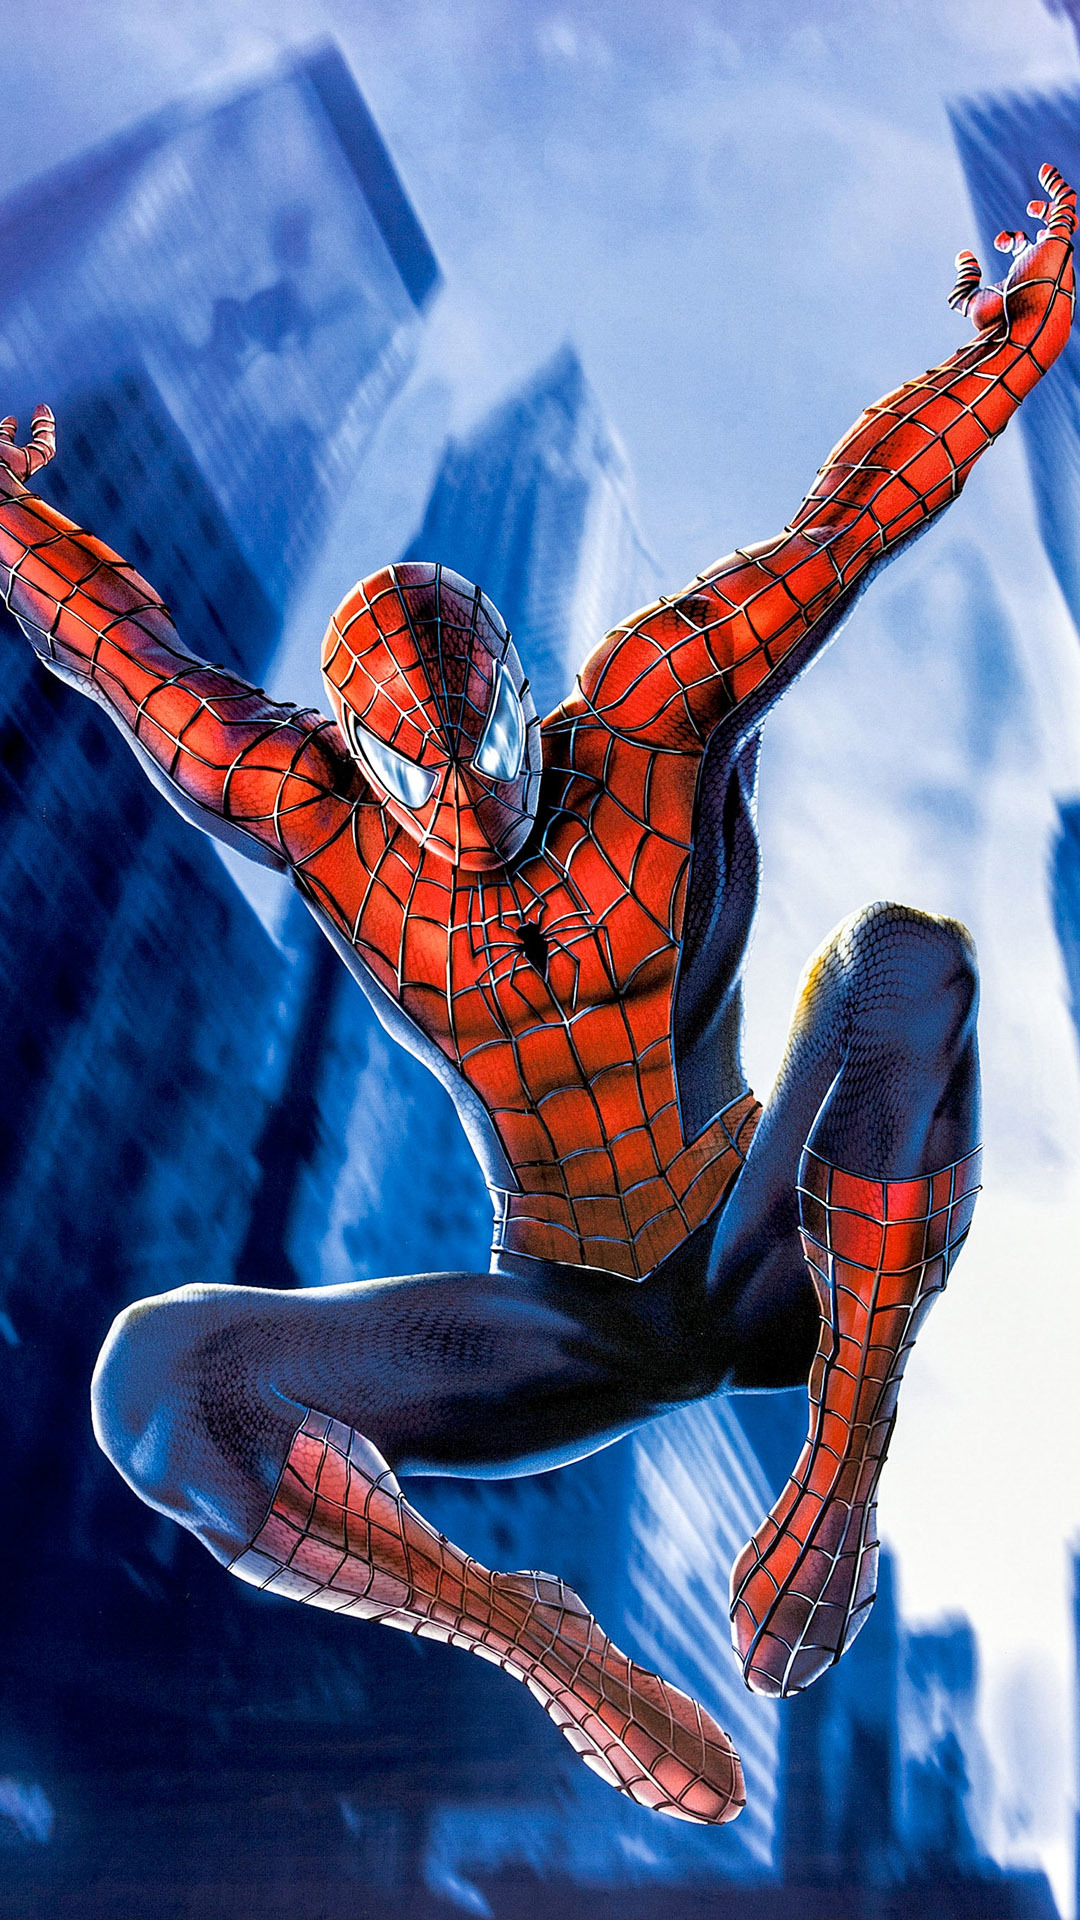 Free Download Spiderman Backgrounds for Iphone | PixelsTalk.Net